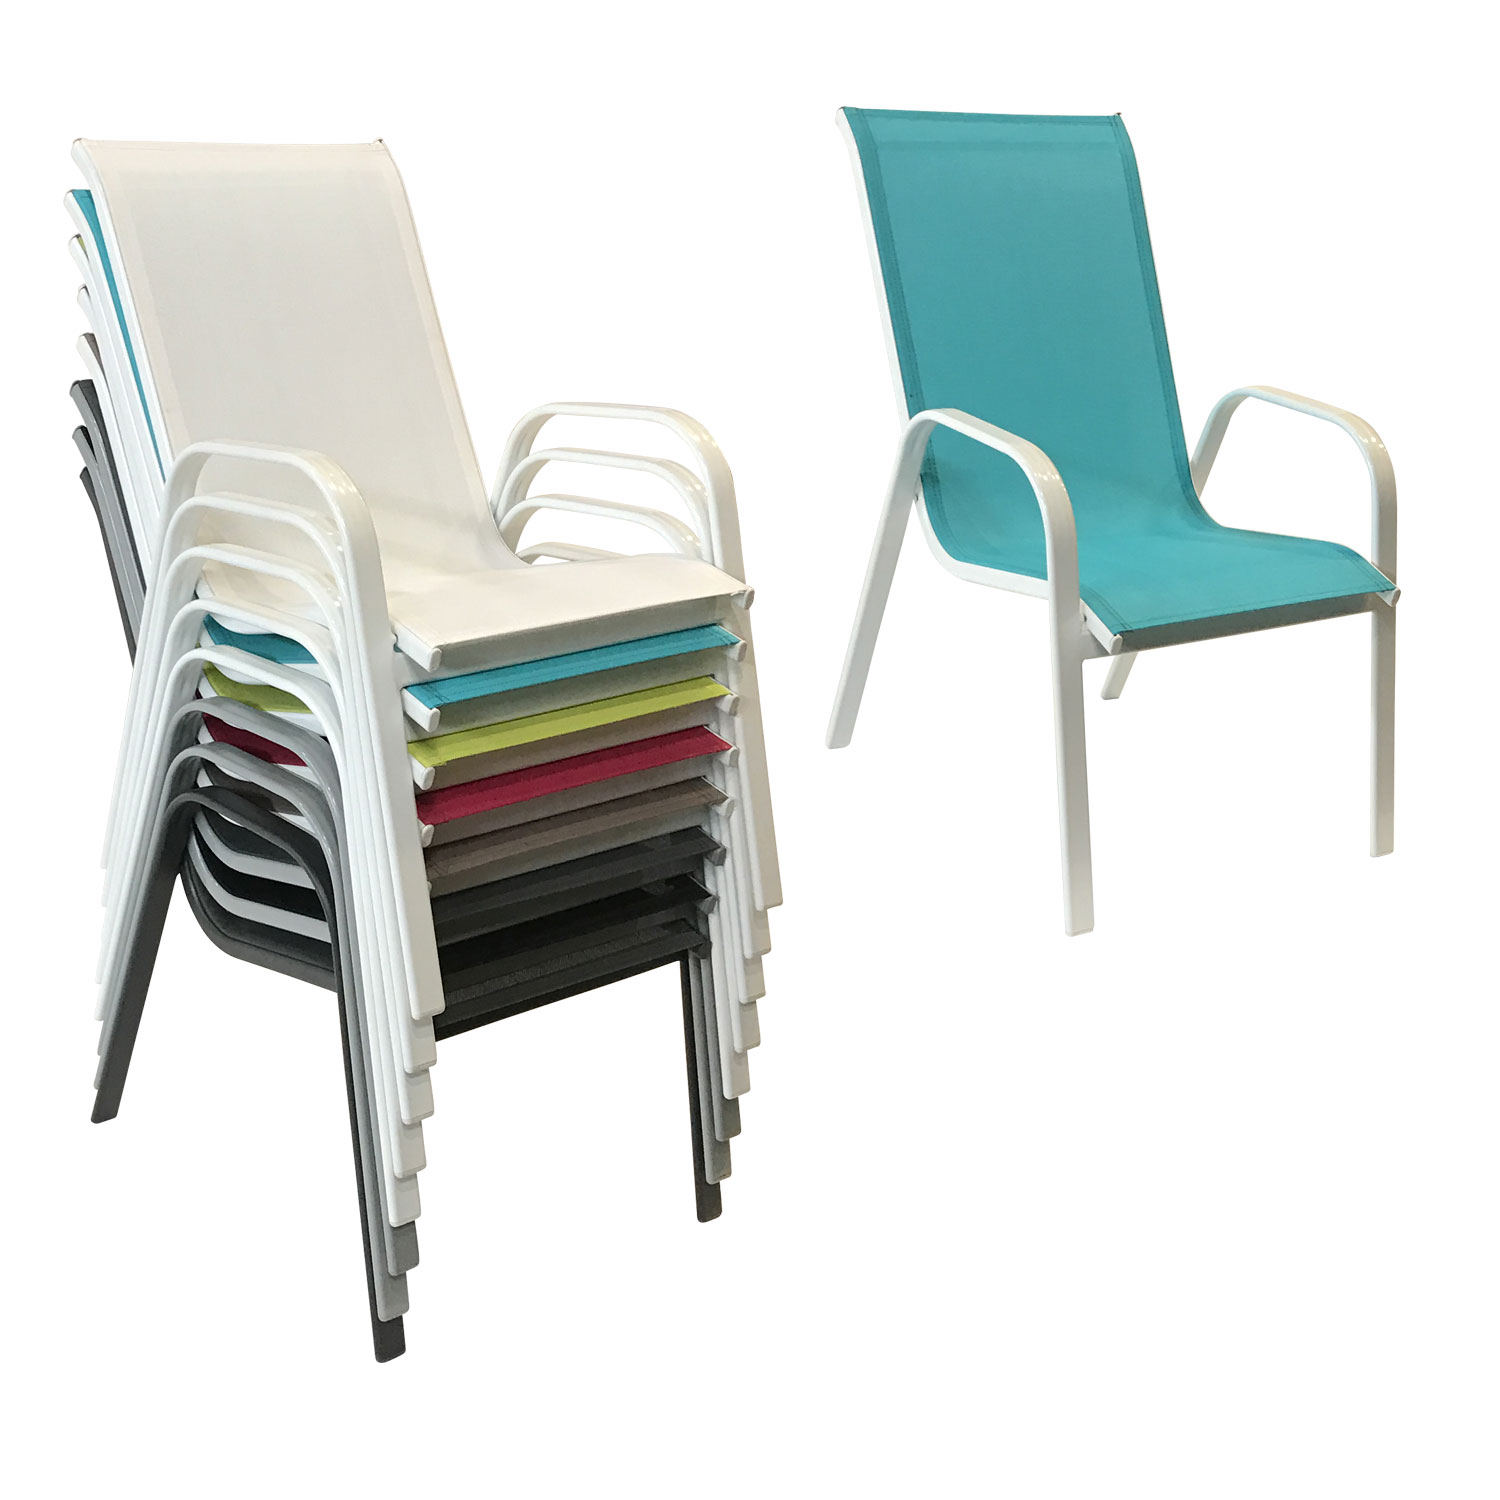 Conjunto de 8 cadeiras MARBELLA em textilene azul - alumínio branco